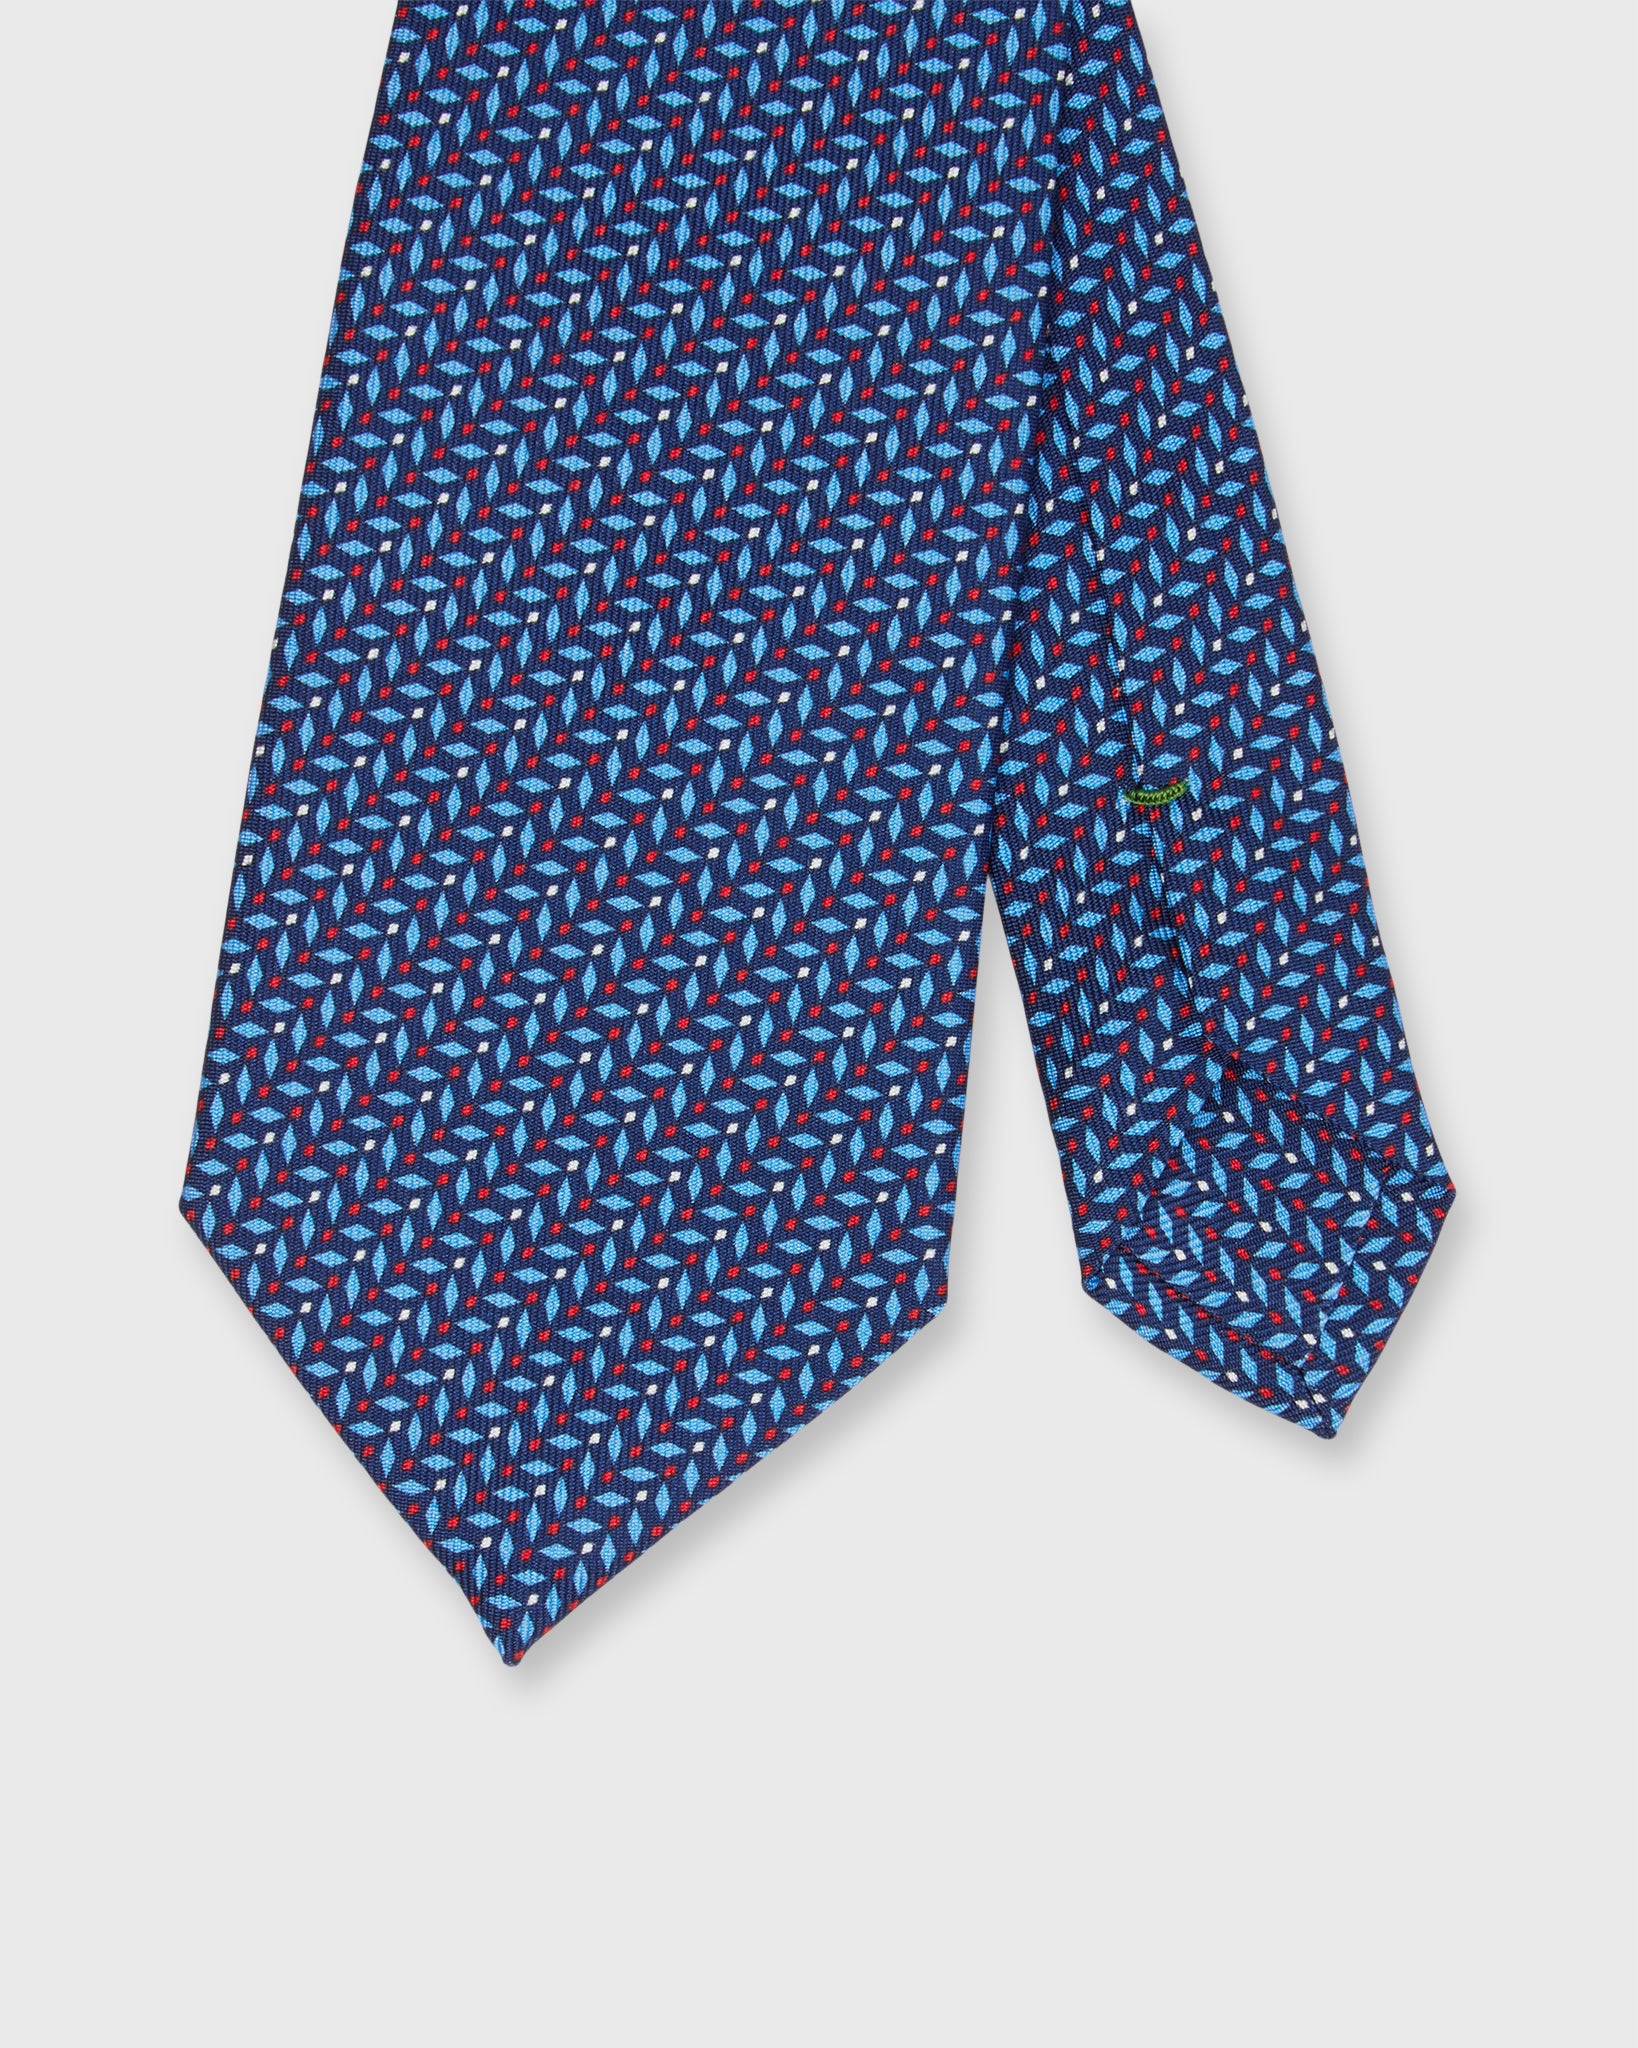 Silk Print Tie in Navy/Blue Diamonds